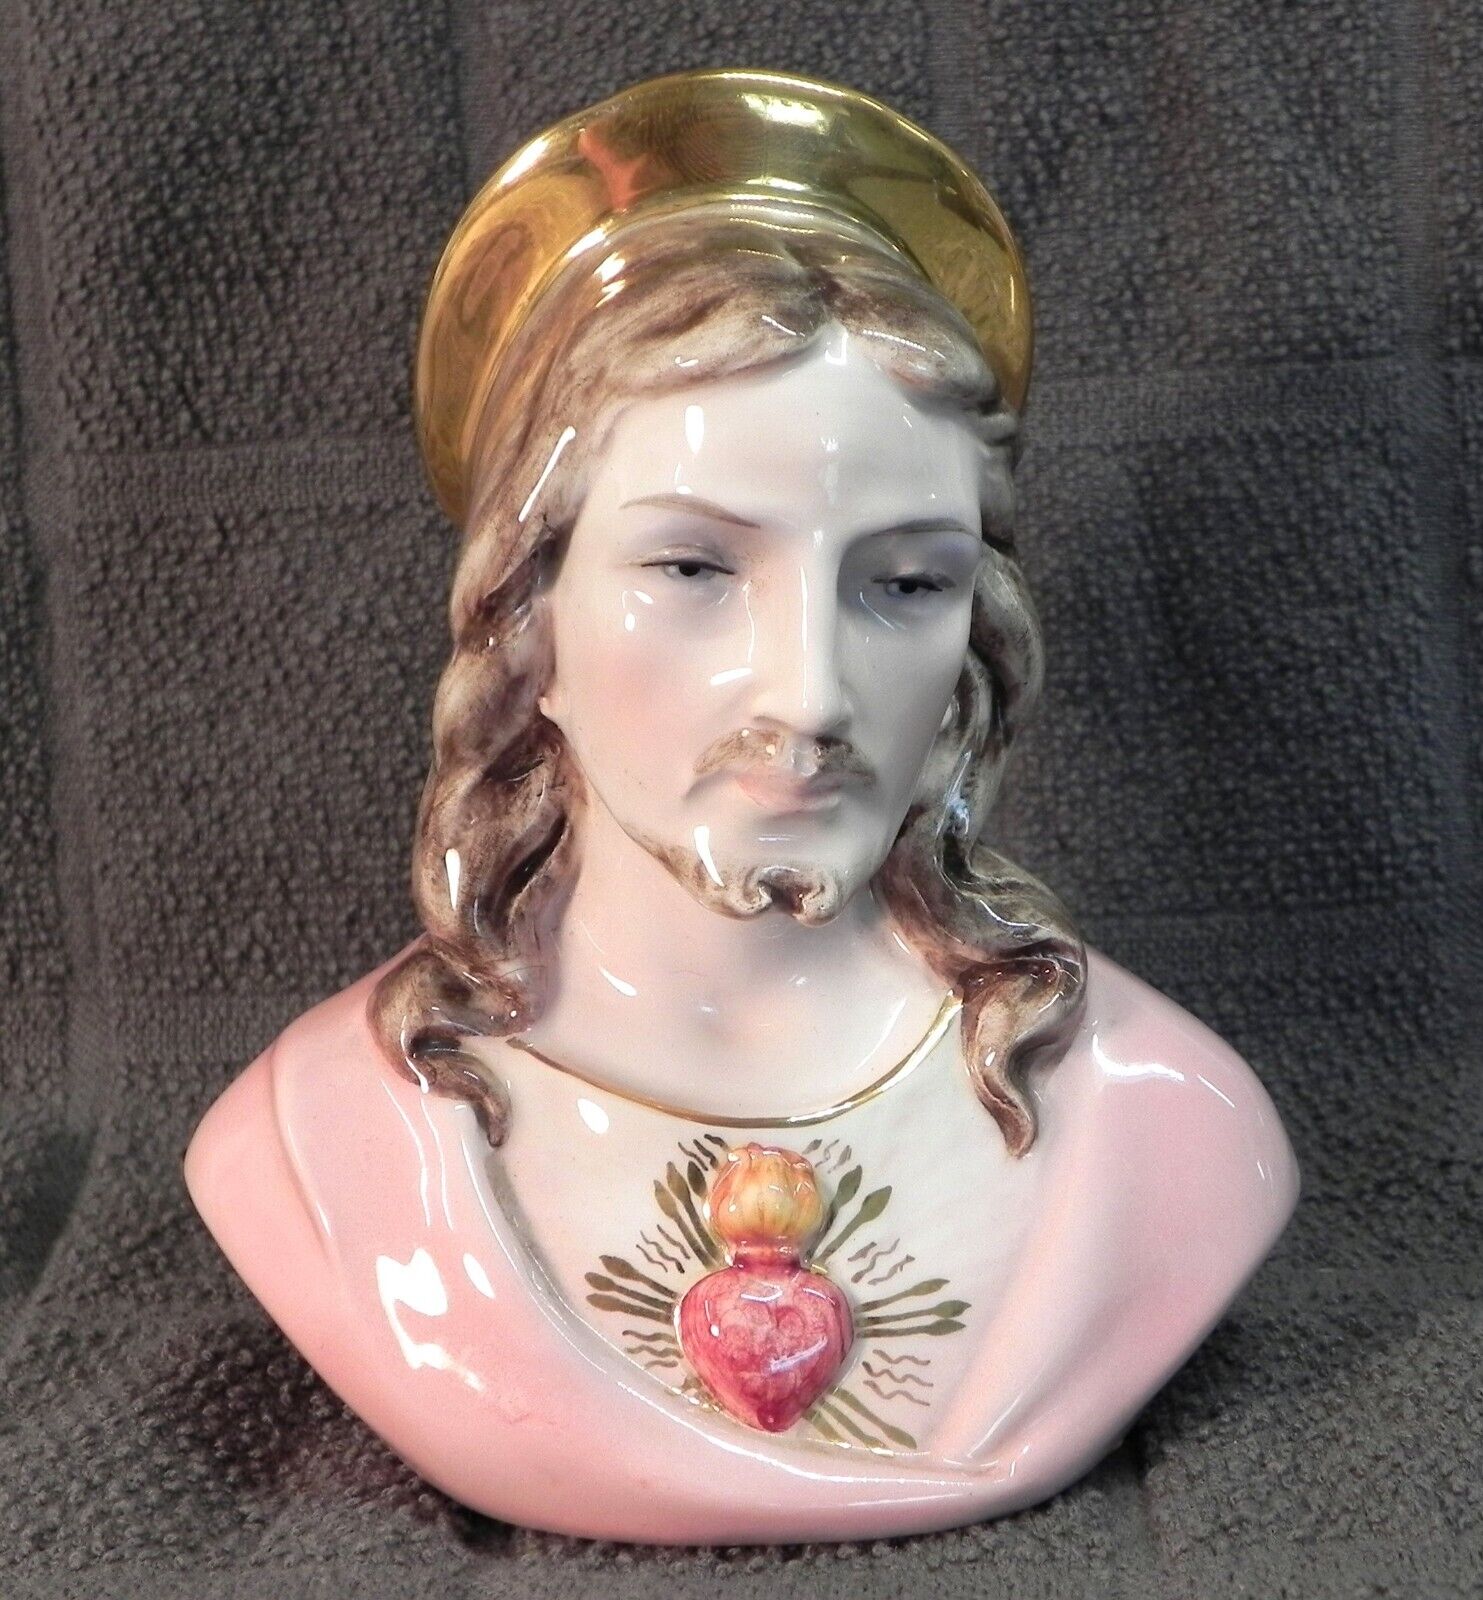 Vintage Jesus Bust Figurine Pink Robe Gold Trim Italy 603